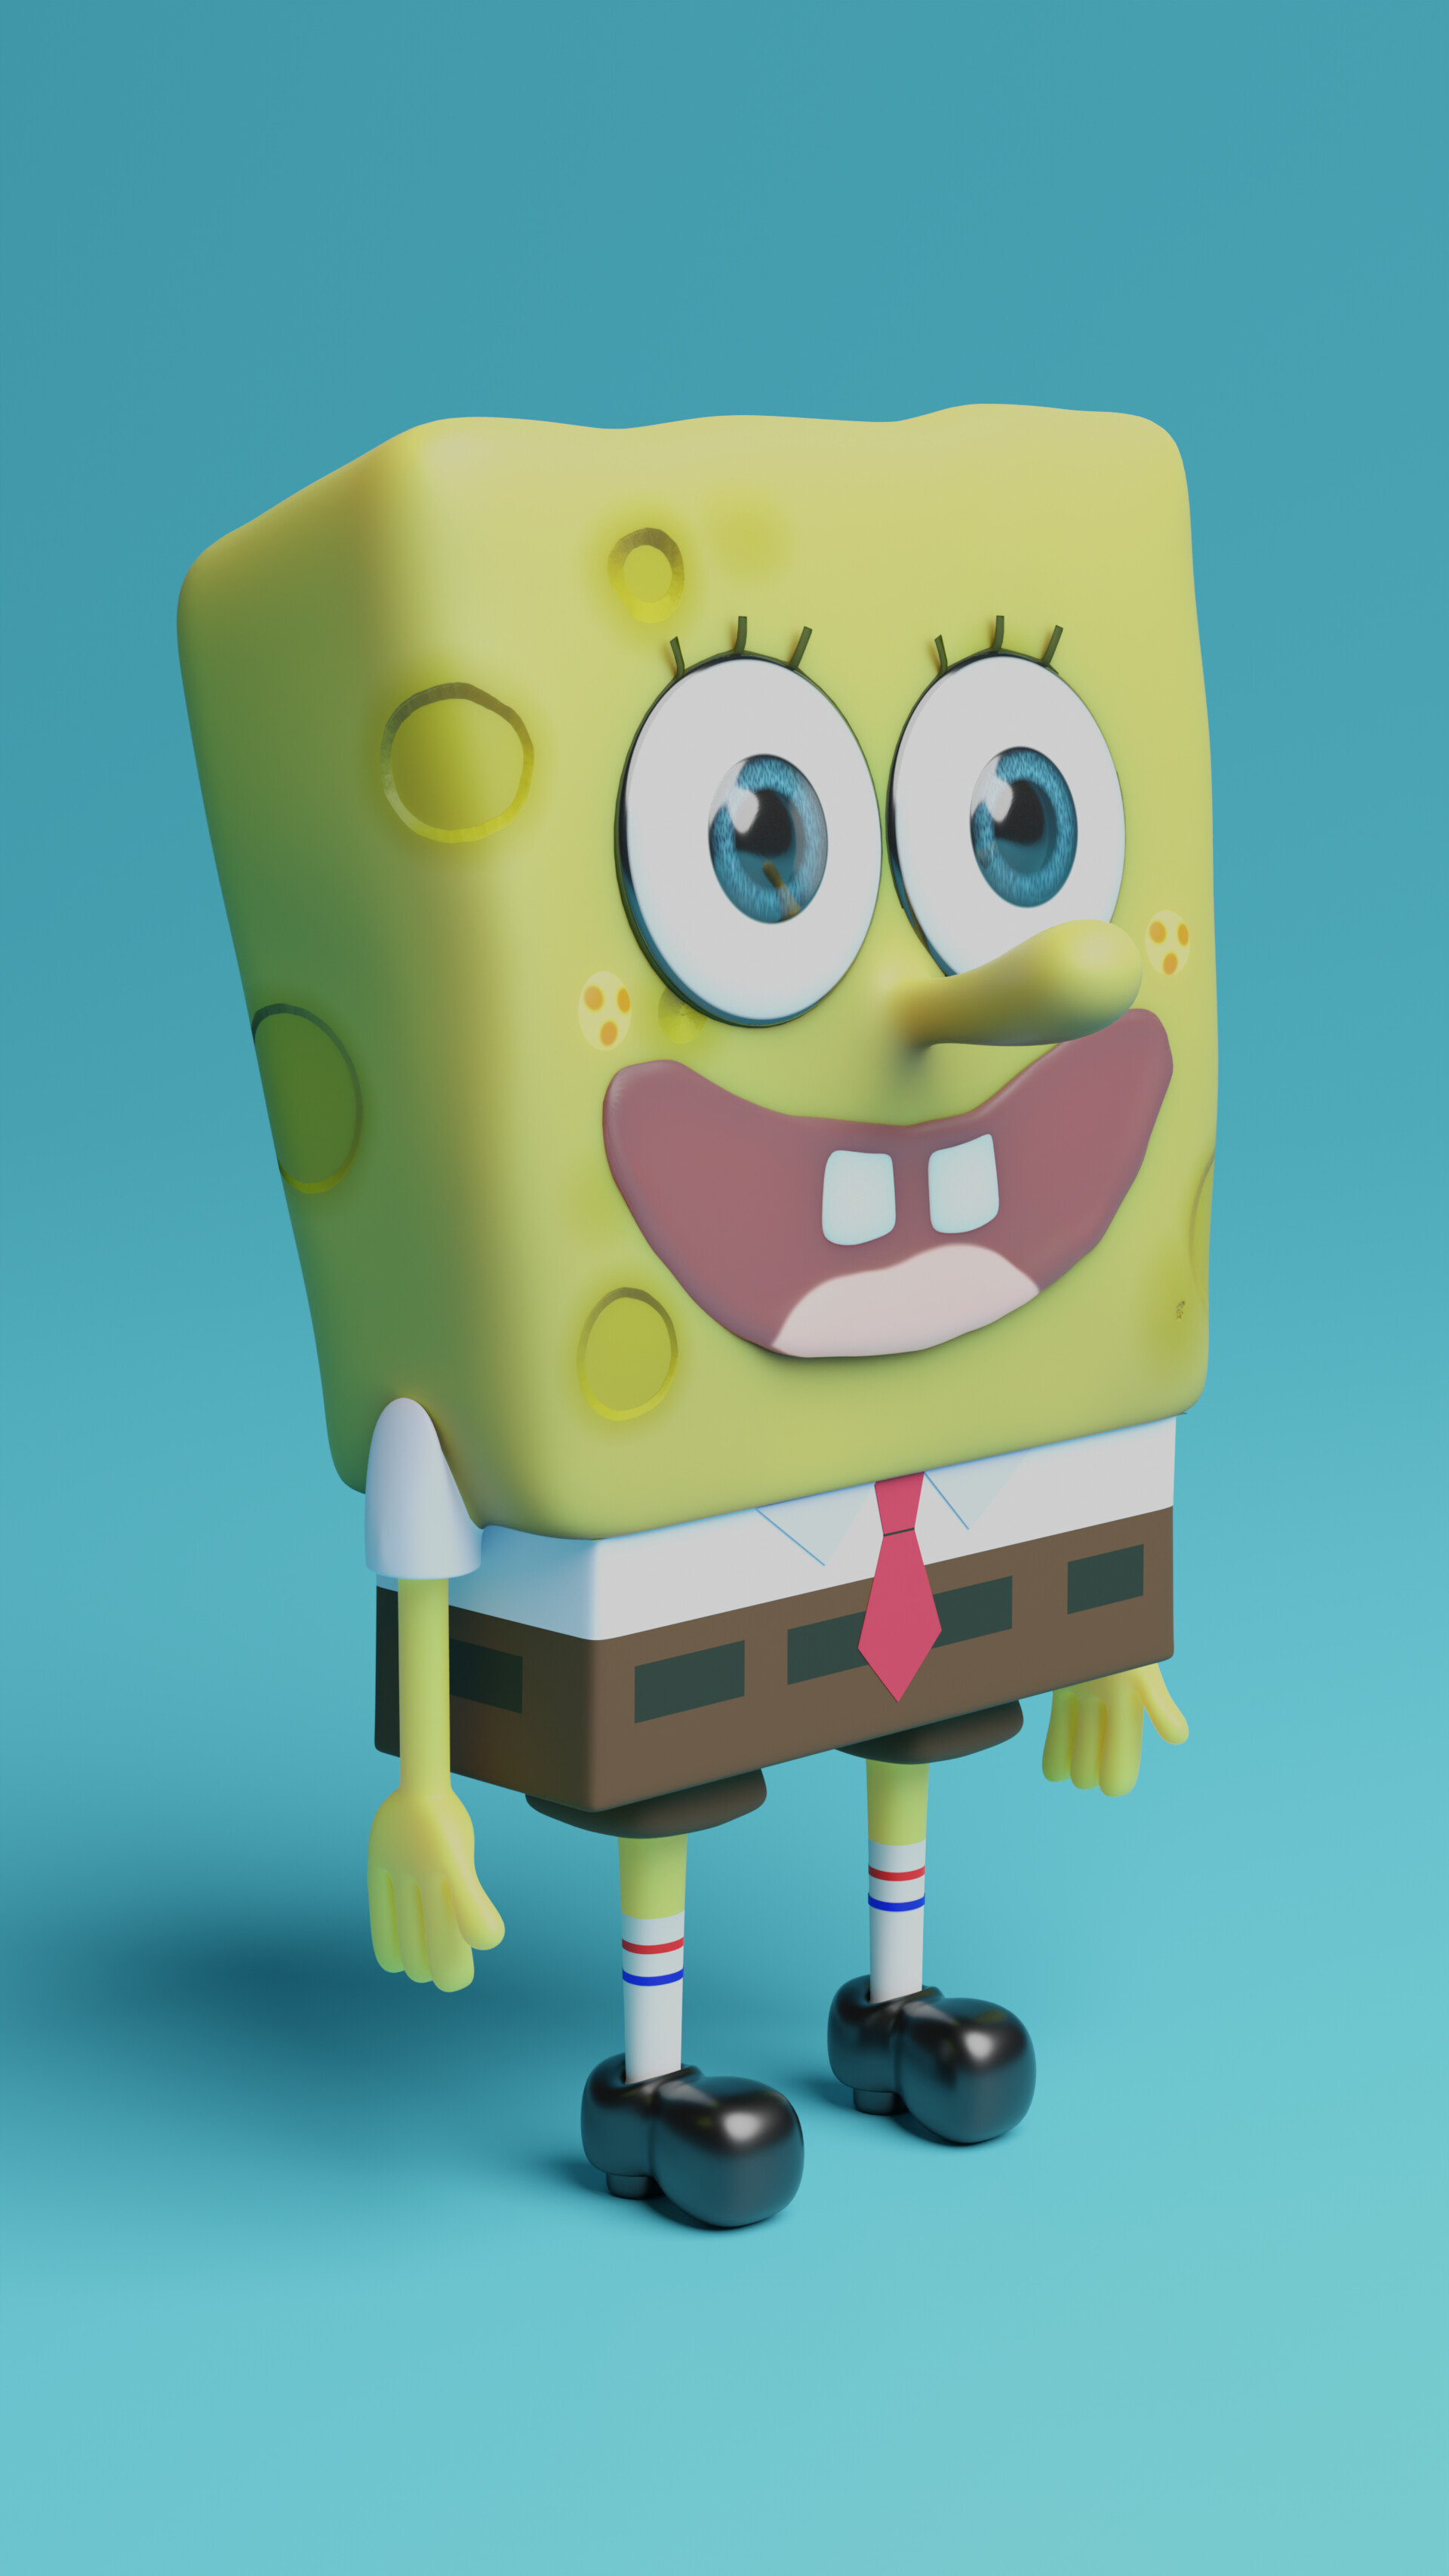 ArtStation - Spongebob